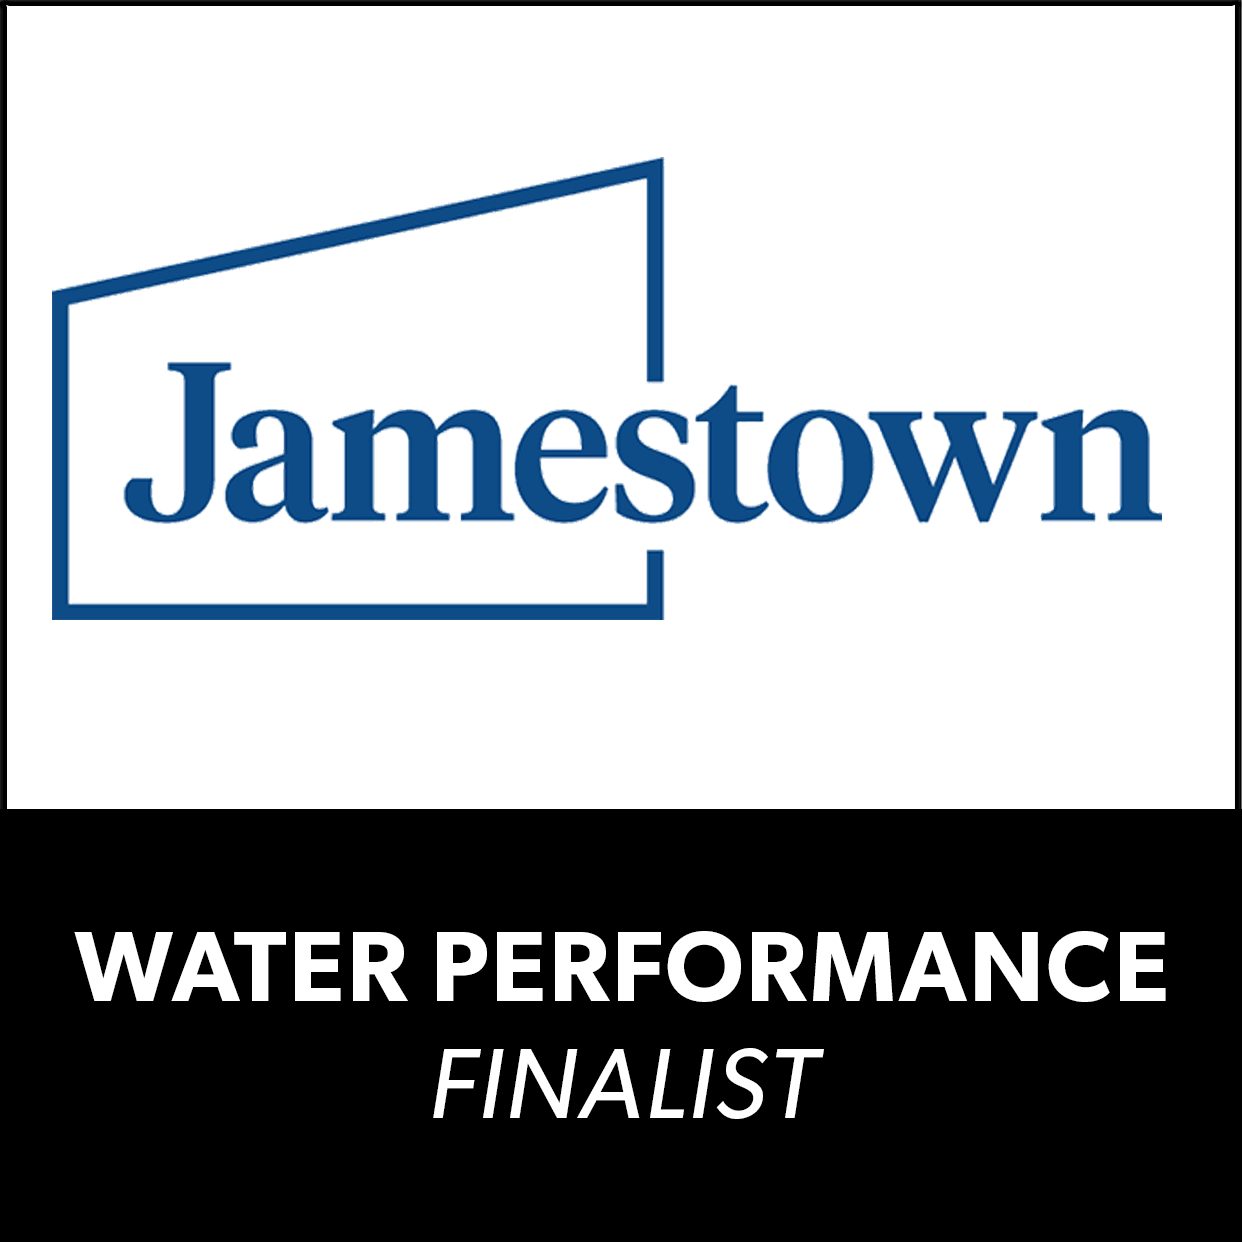 WP_Jamestown_logo_award-finalist.png